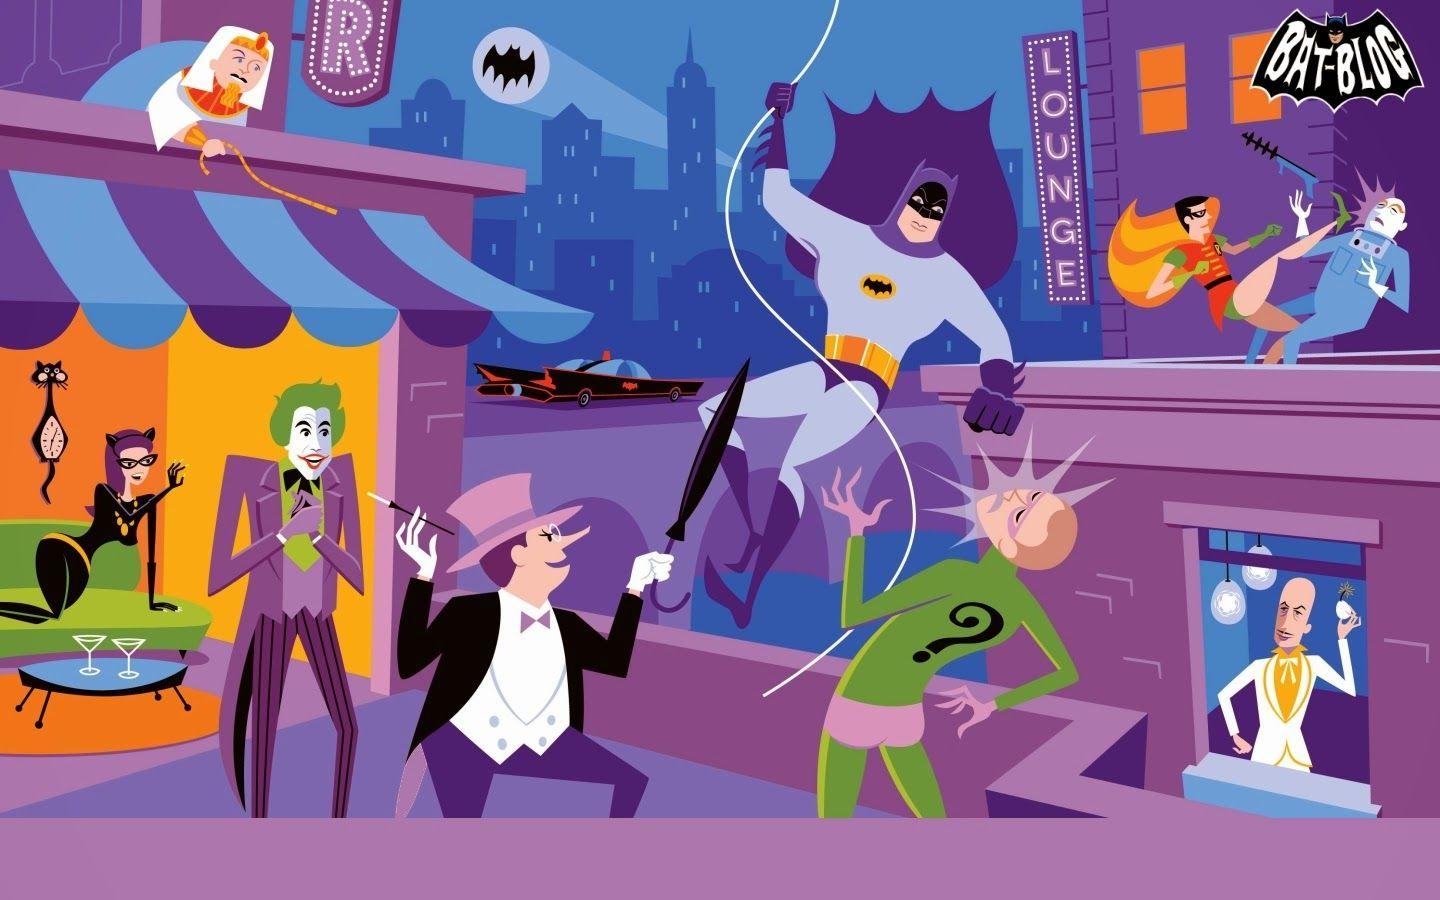 BAT, BATMAN TOYS and COLLECTIBLES: 75 YEARS OF BATMAN Wallpaper BATMAN TV Series Art